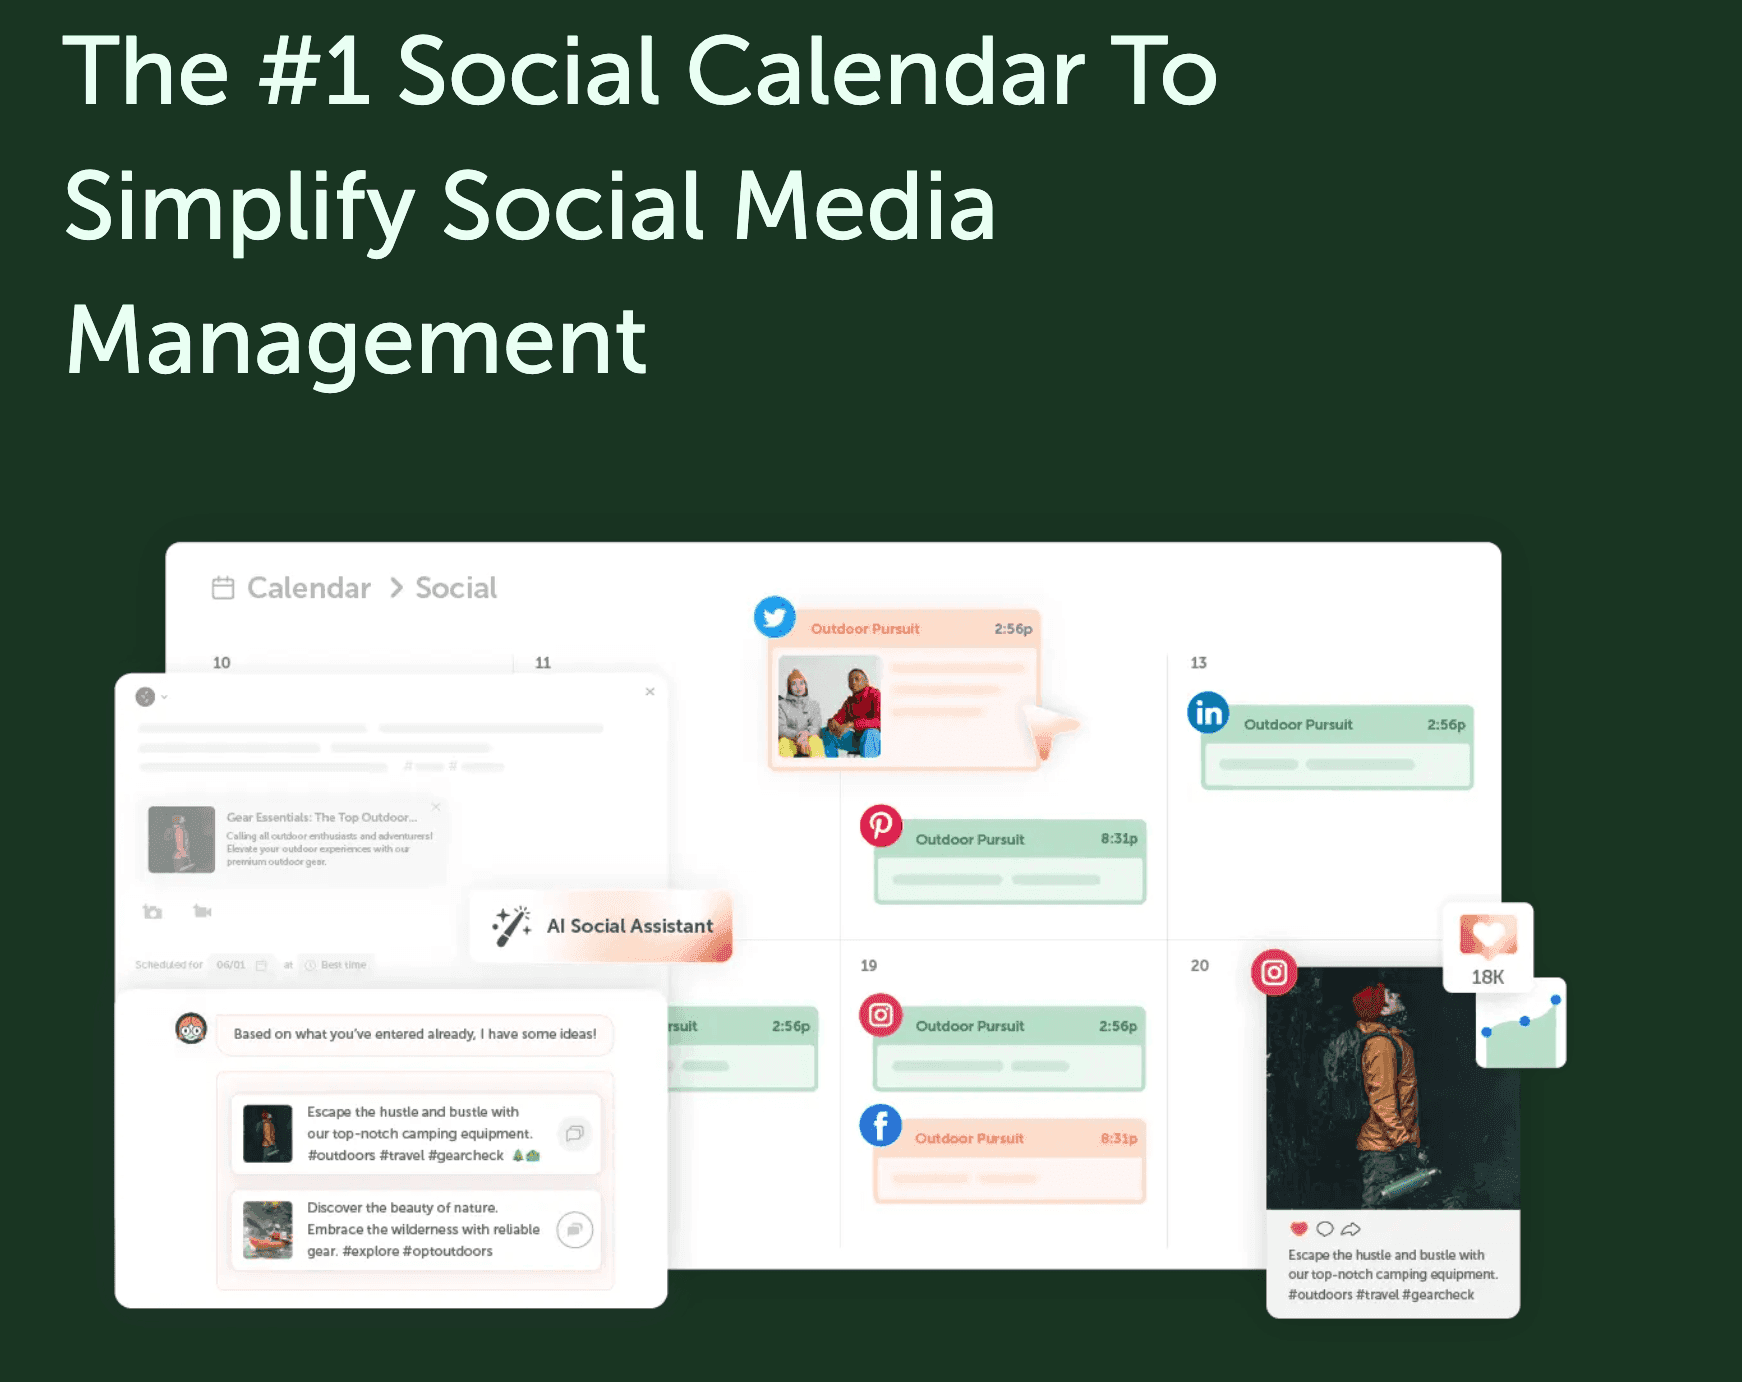 The #1 social calendar to simplify social media management